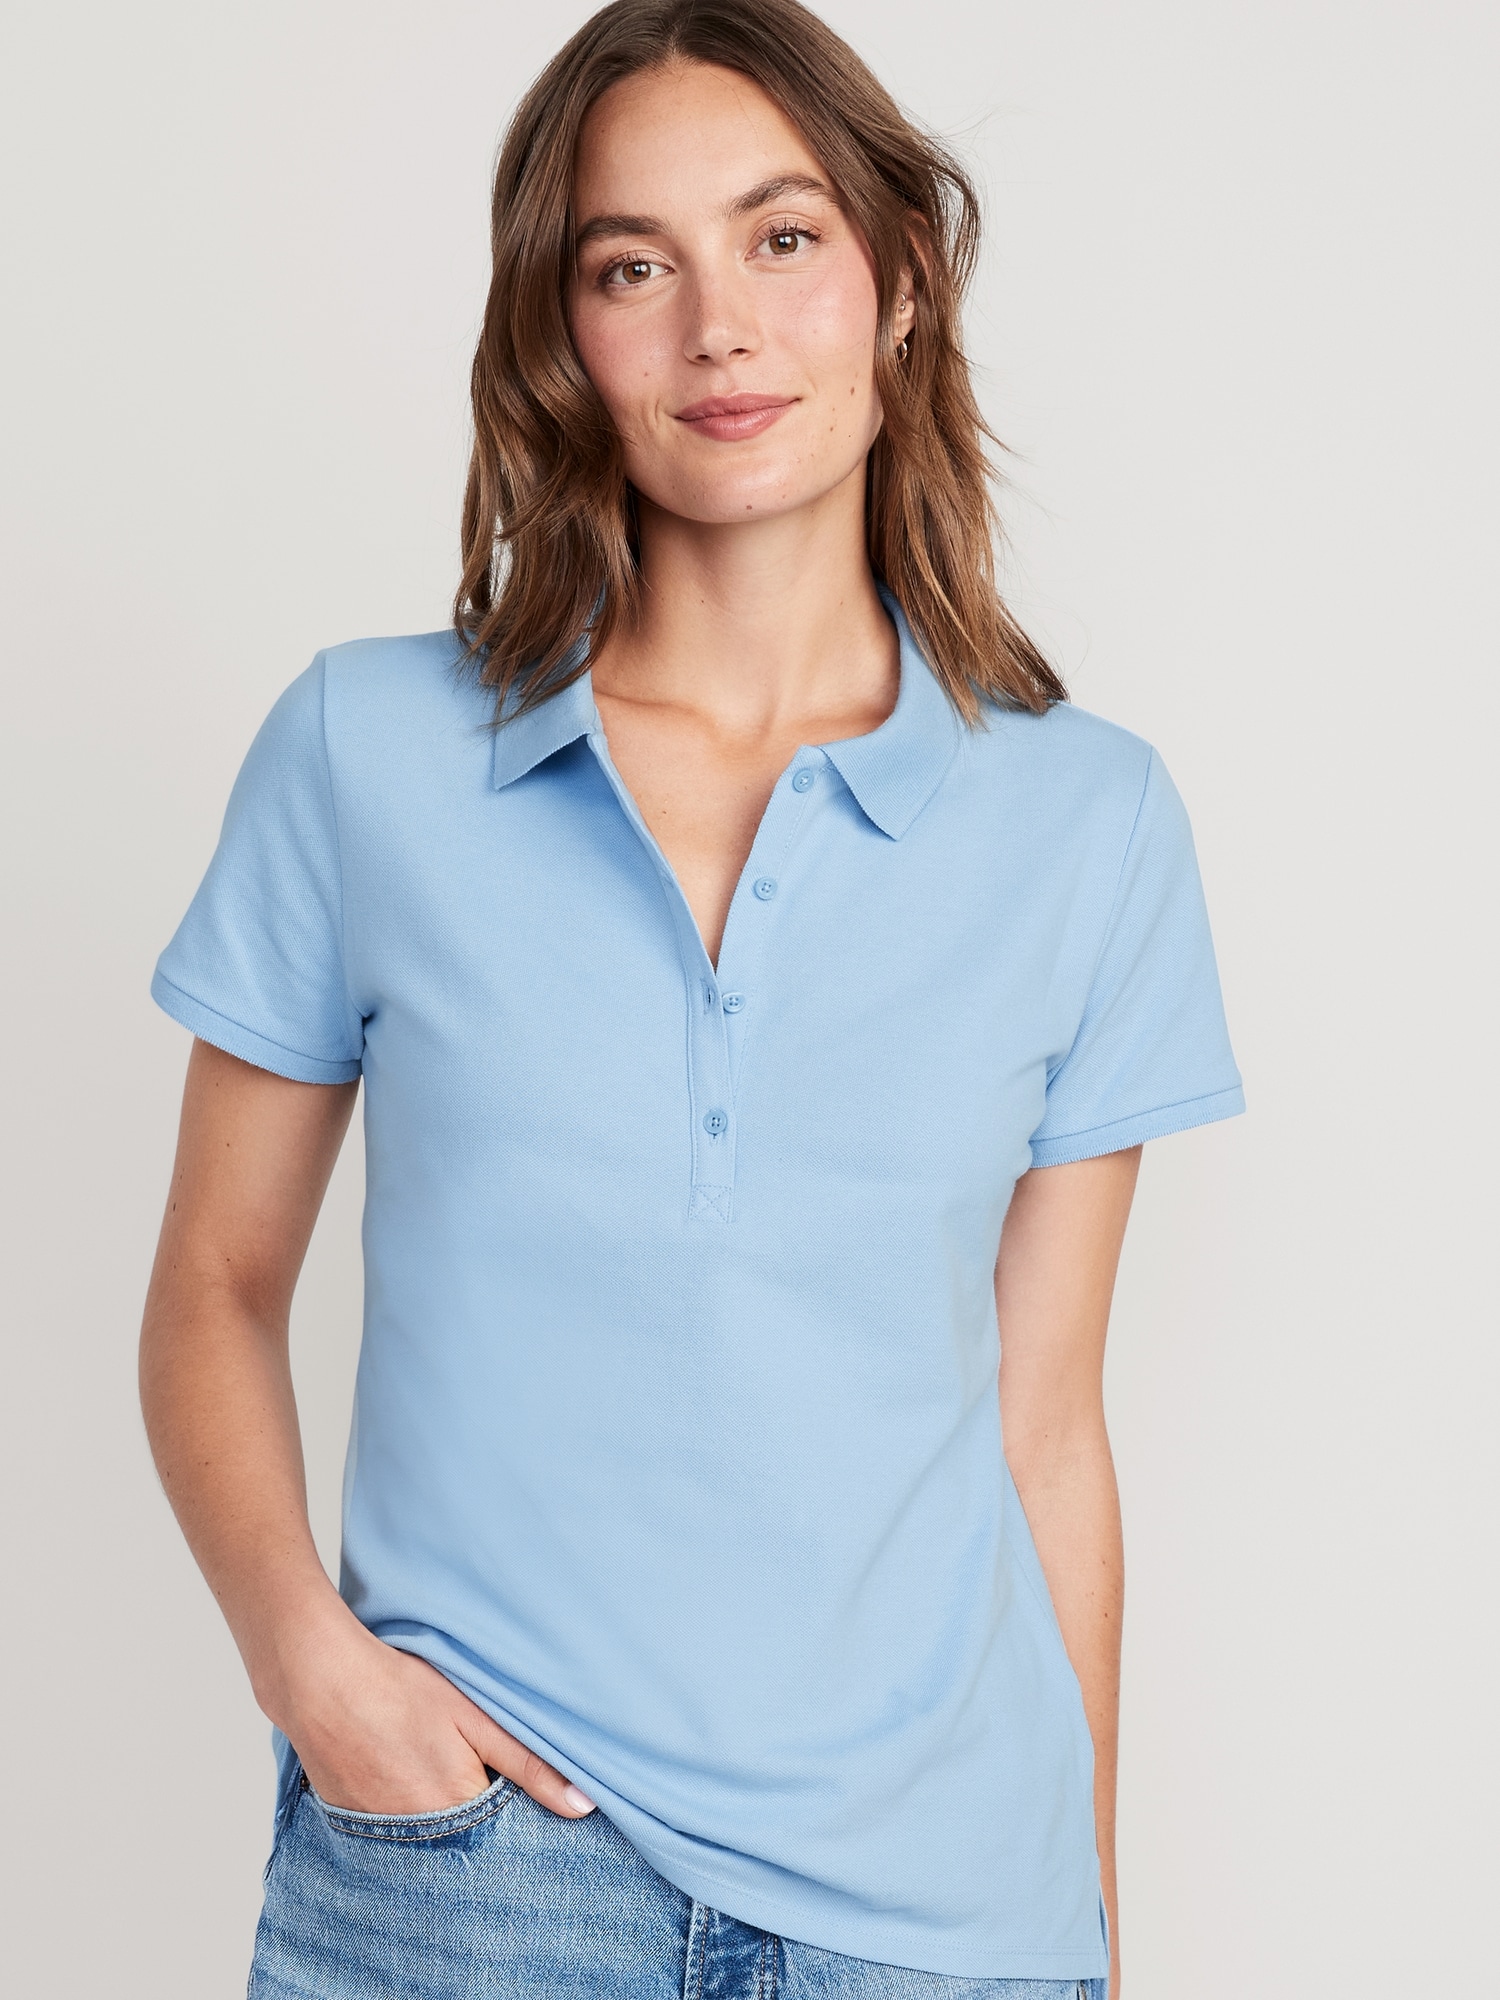 Old Navy Uniform Pique Polo Shirt for Women blue. 1